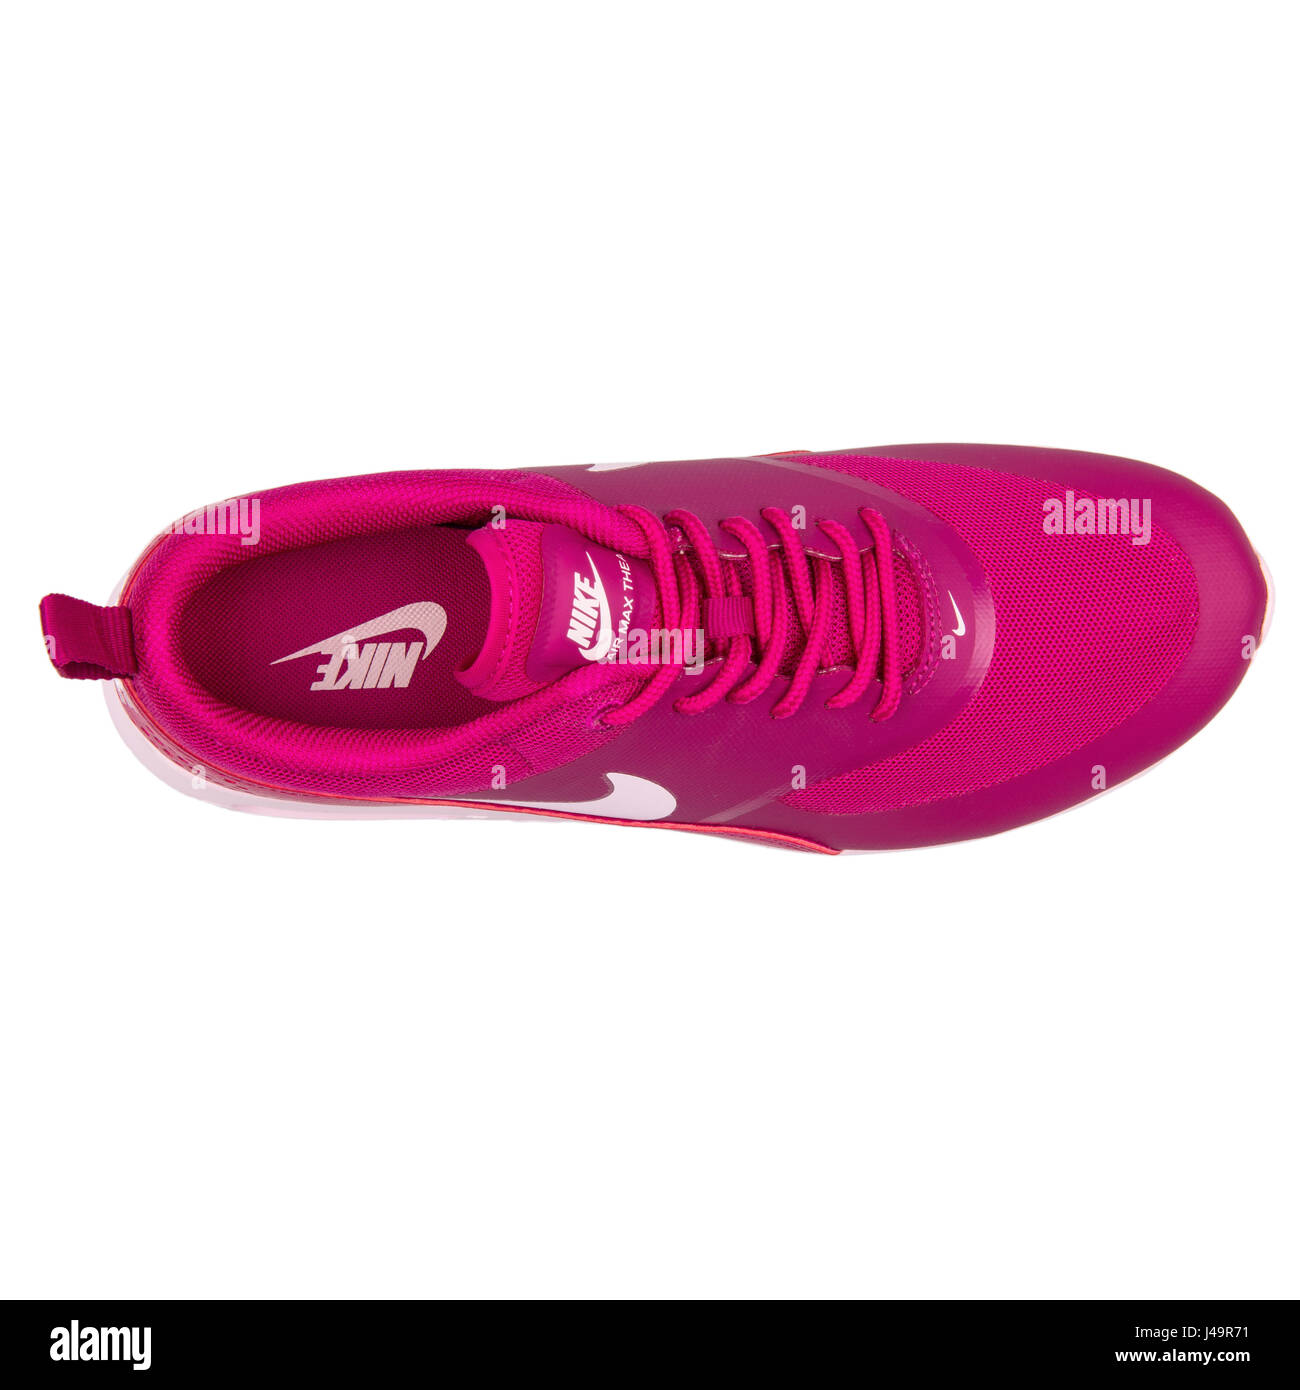 WMNS Nike Air Max THEA Sport/Prism fucsia - 599409-605 Fotografía stock - Alamy